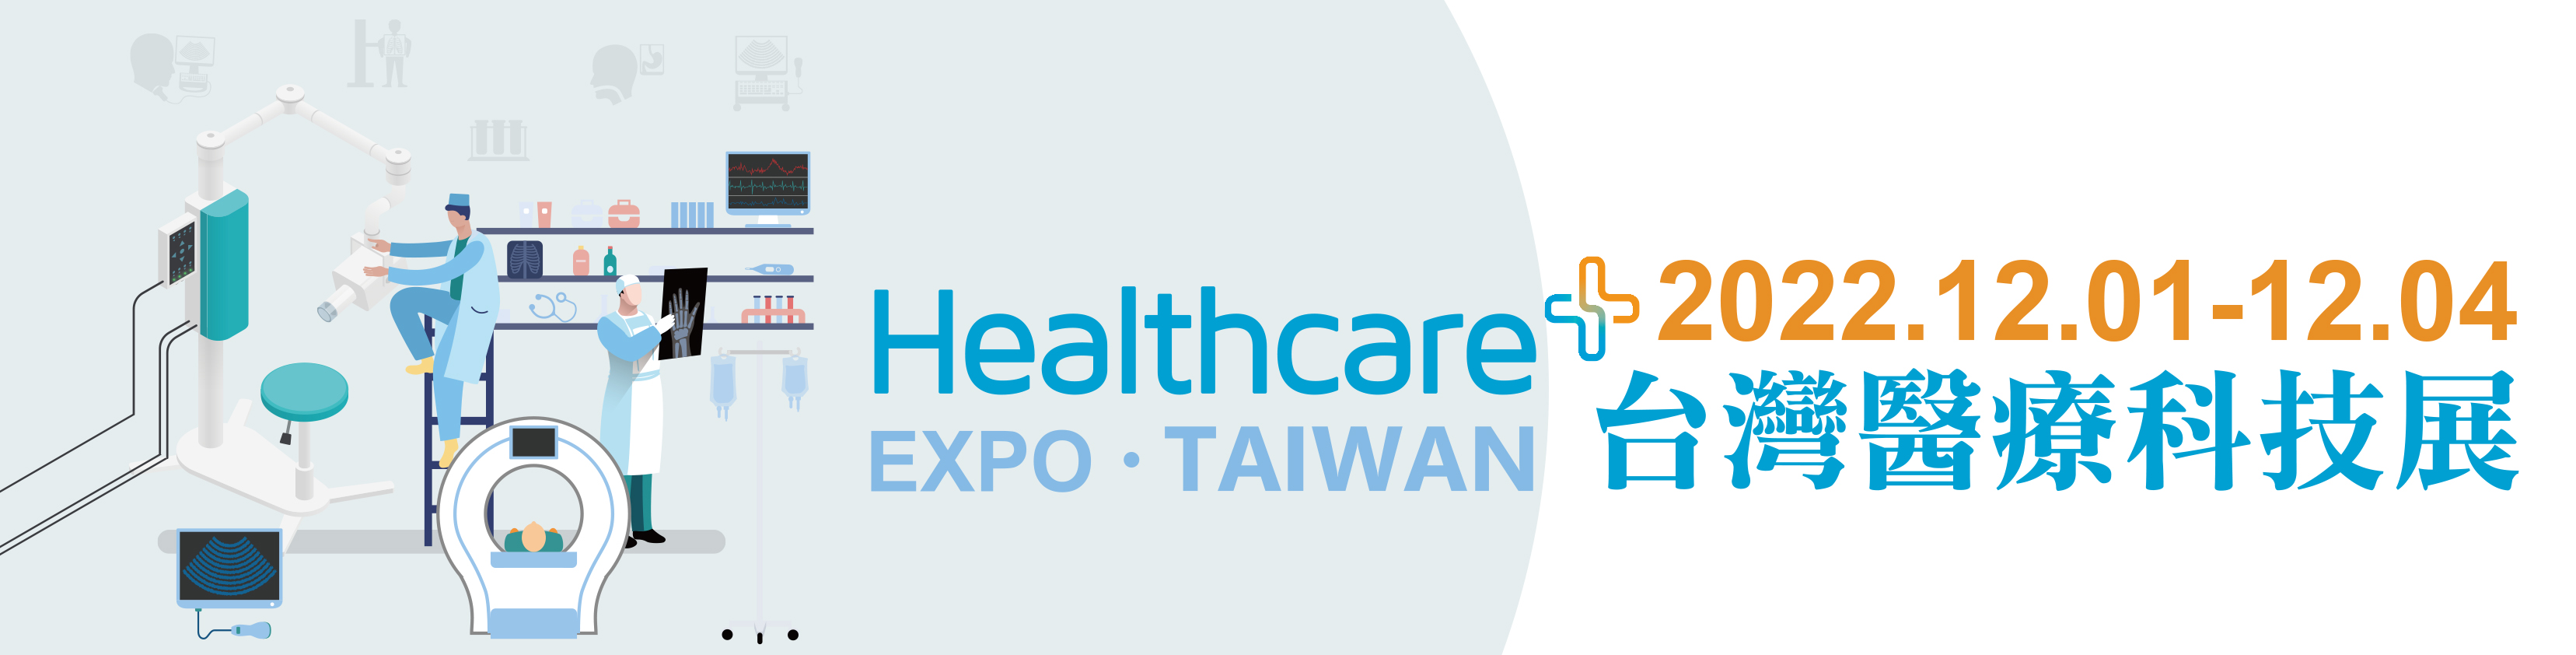 Healthcare EXPO. TAIWAN 2022